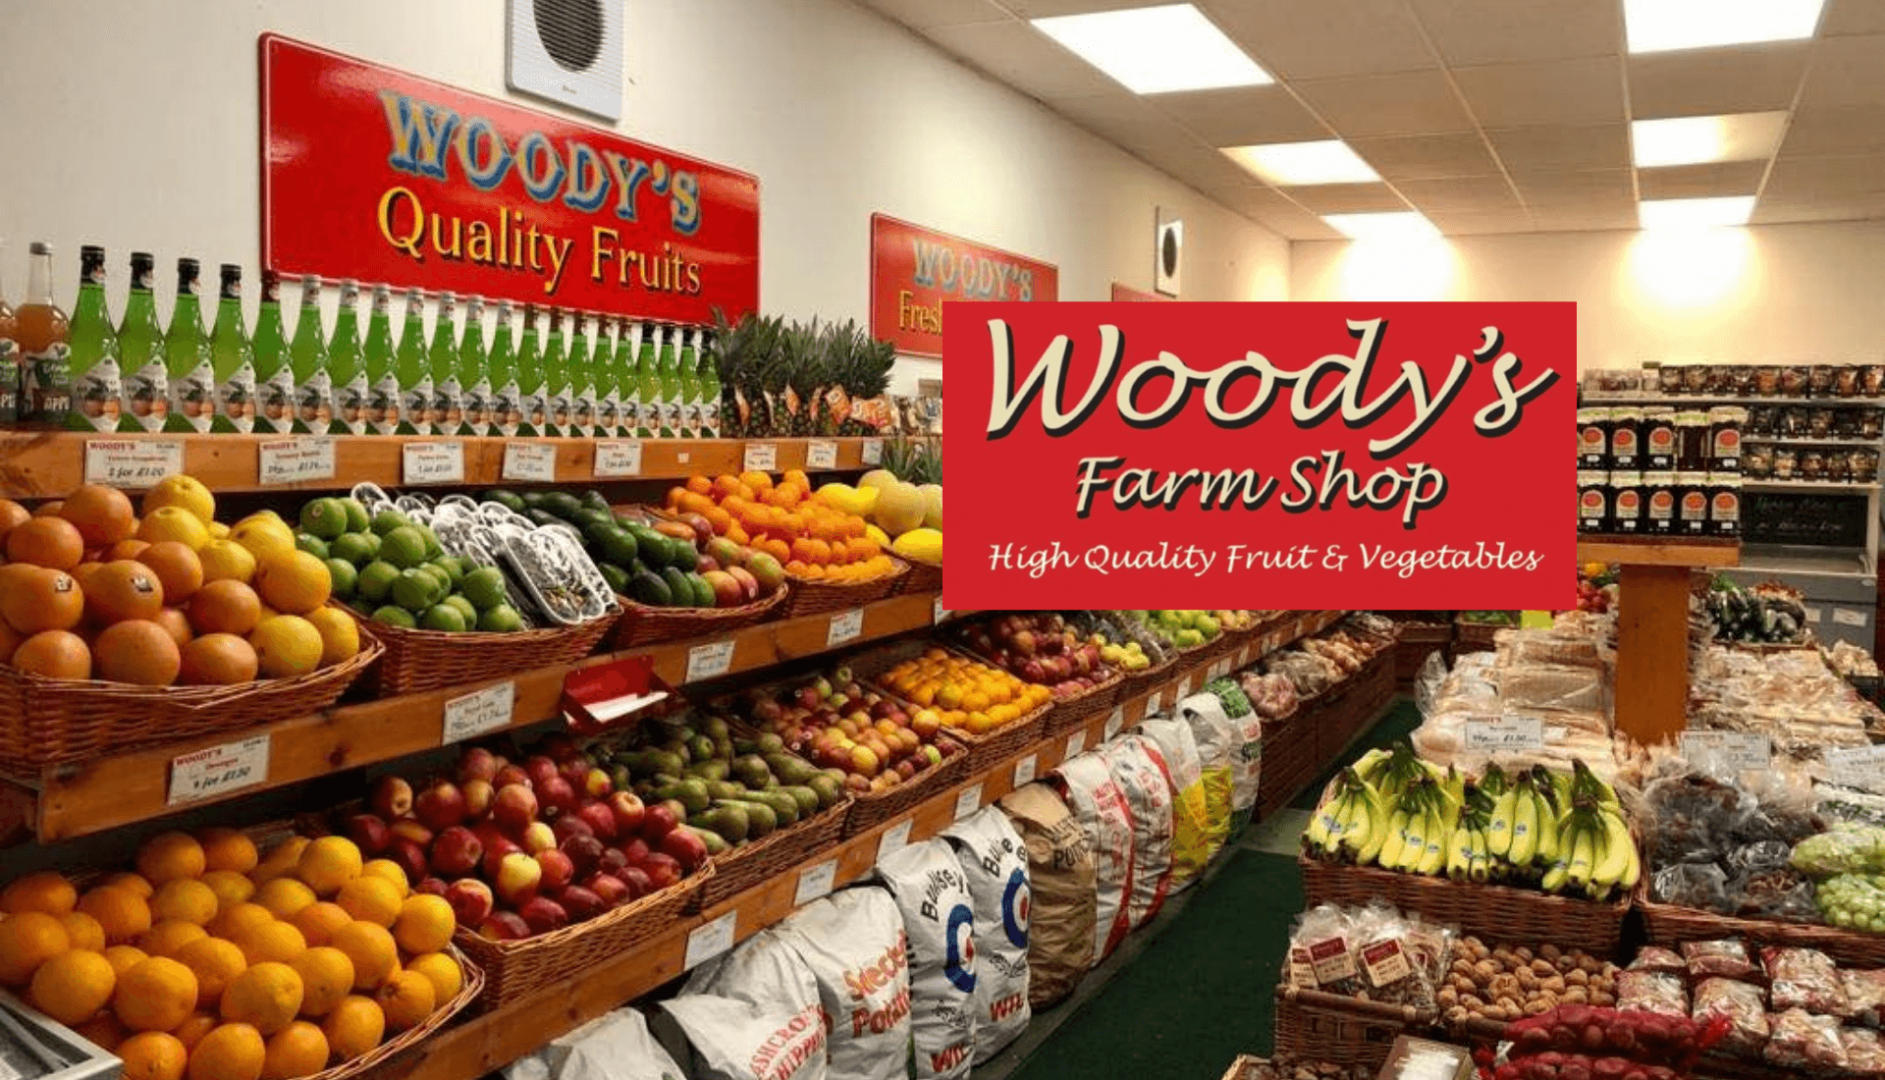 Woodys Farm Shop in Tewkesbury